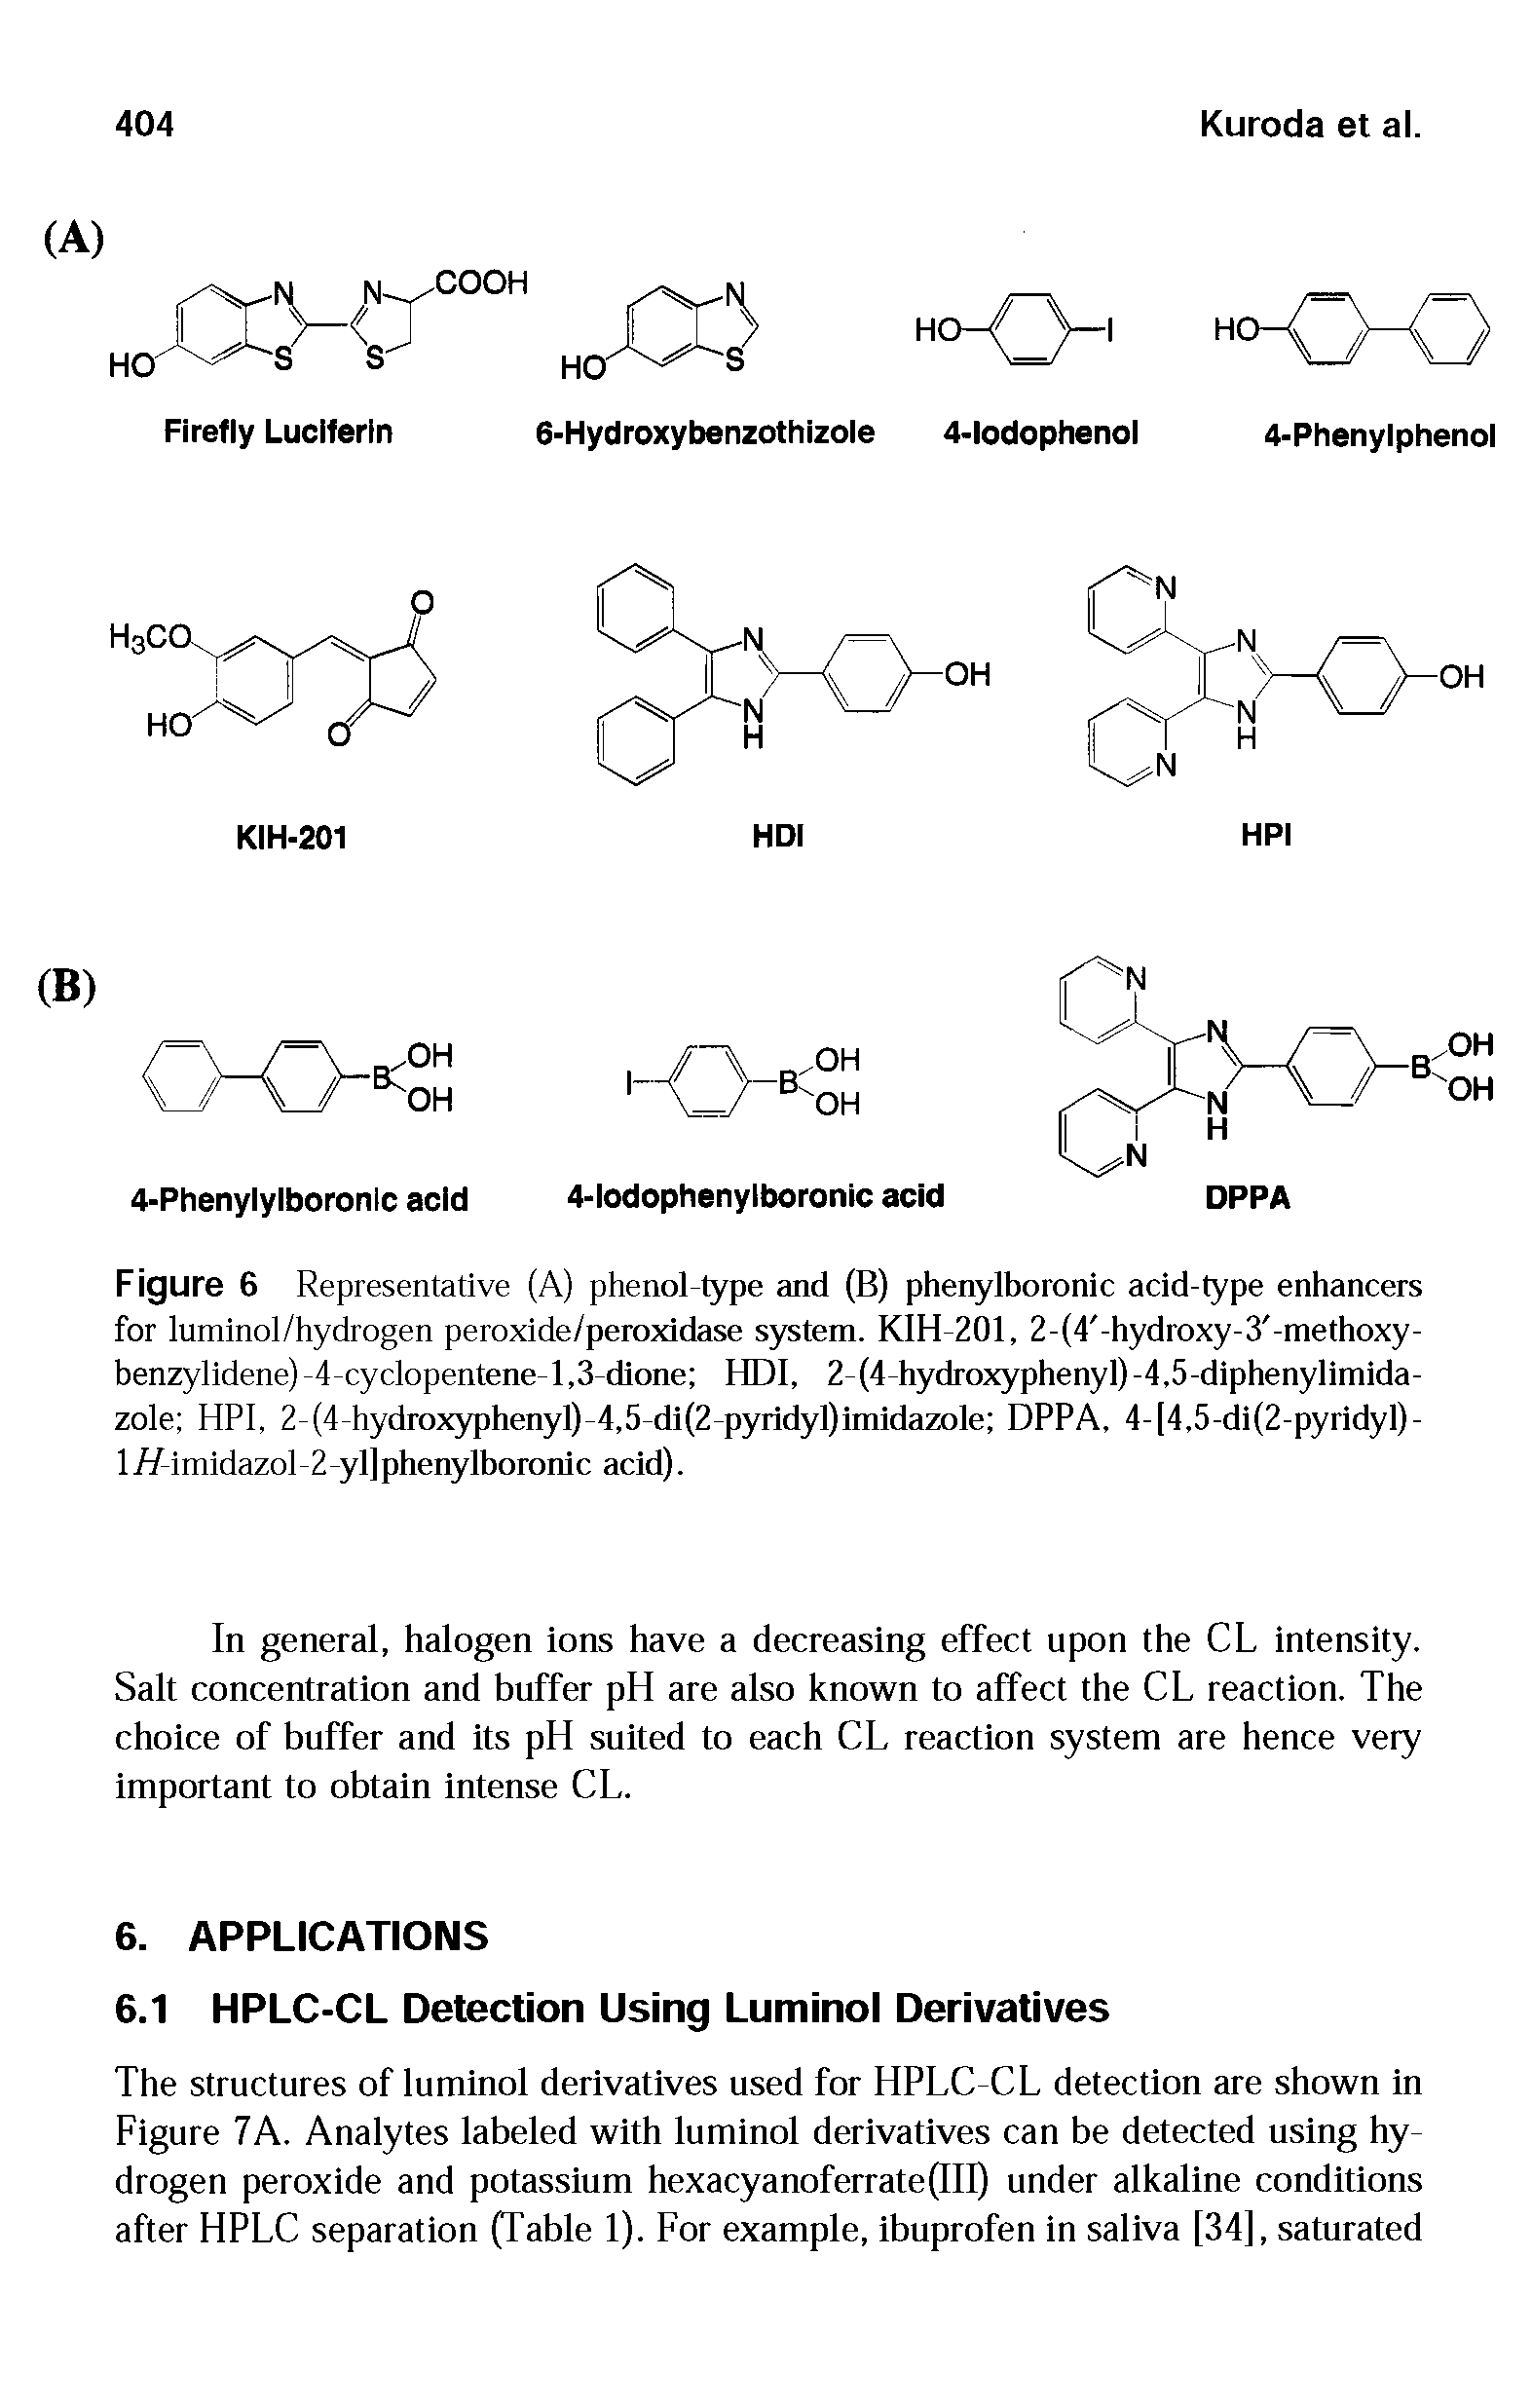 Figure 6 Representative (A) phenol-type and (B) phenylboronic acid-type enhancers for luminol/hydrogen peroxide/peroxidase system. KIH-201, 2-(4 -hydroxy-3 -methoxy-benzylidene)-4-cyclopentene-l,3-dione HDI, 2-(4-hydroxyphenyl)-4,5-diphenylimida-zole HPI, 2-(4-hydroxyphenyl)-4,5-di(2-pyridyl)imidazole DPPA, 4-[4,5-di(2-pyridyl)-1 //iruidazol 2 yl phenylboronic acid).